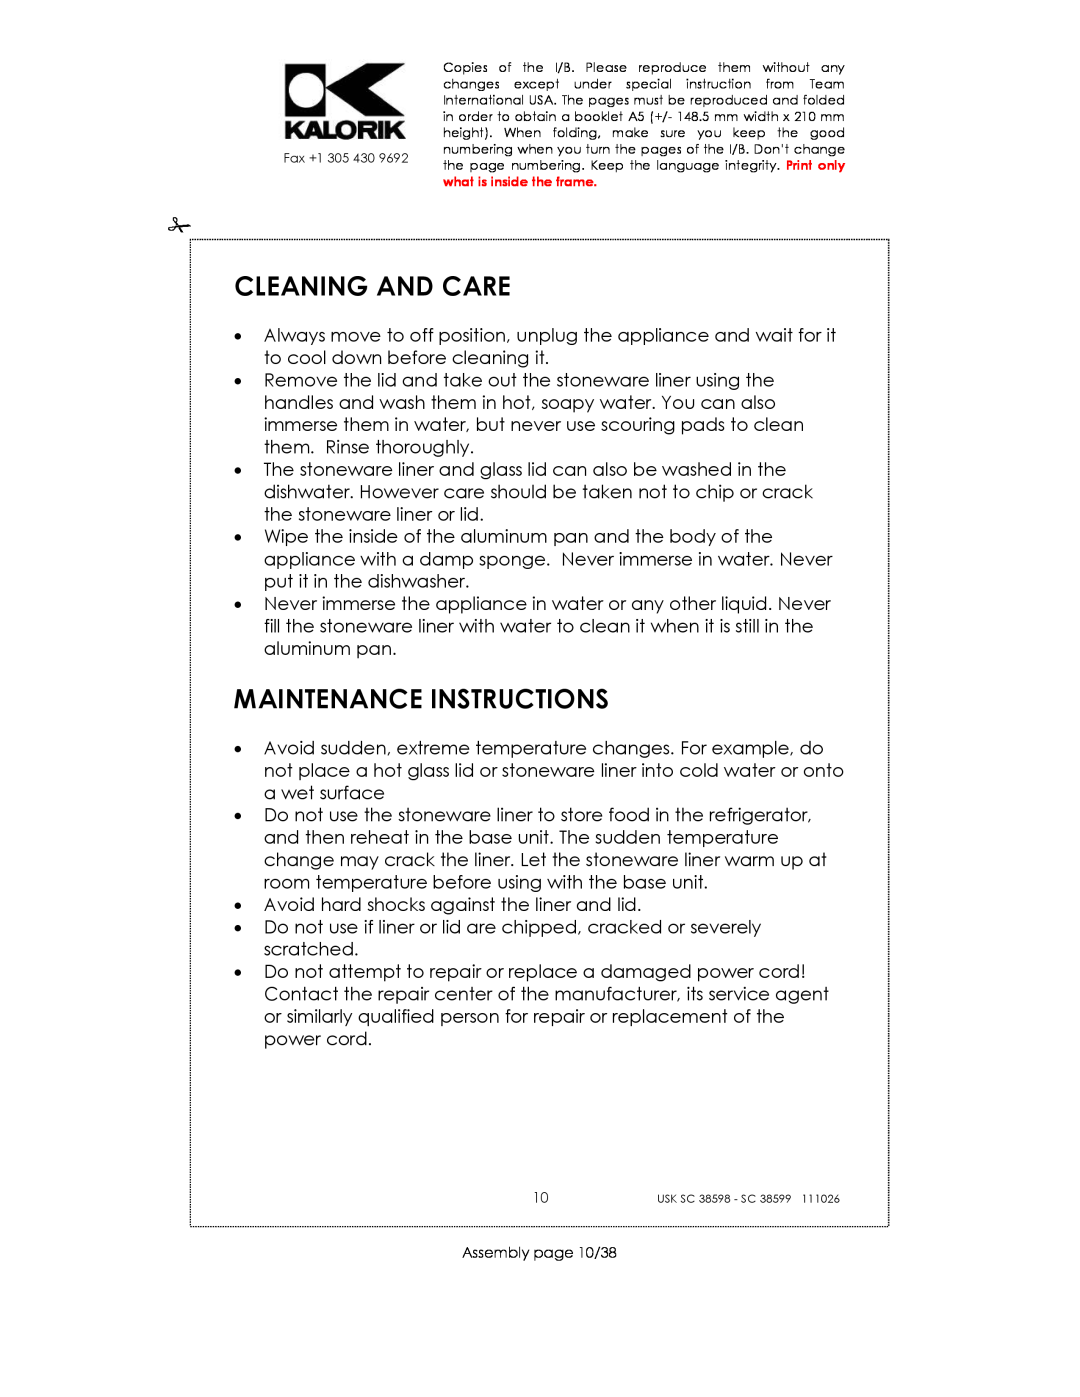 Kalorik usk sc 38598, 38599 manual Cleaning And Care, Maintenance Instructions 